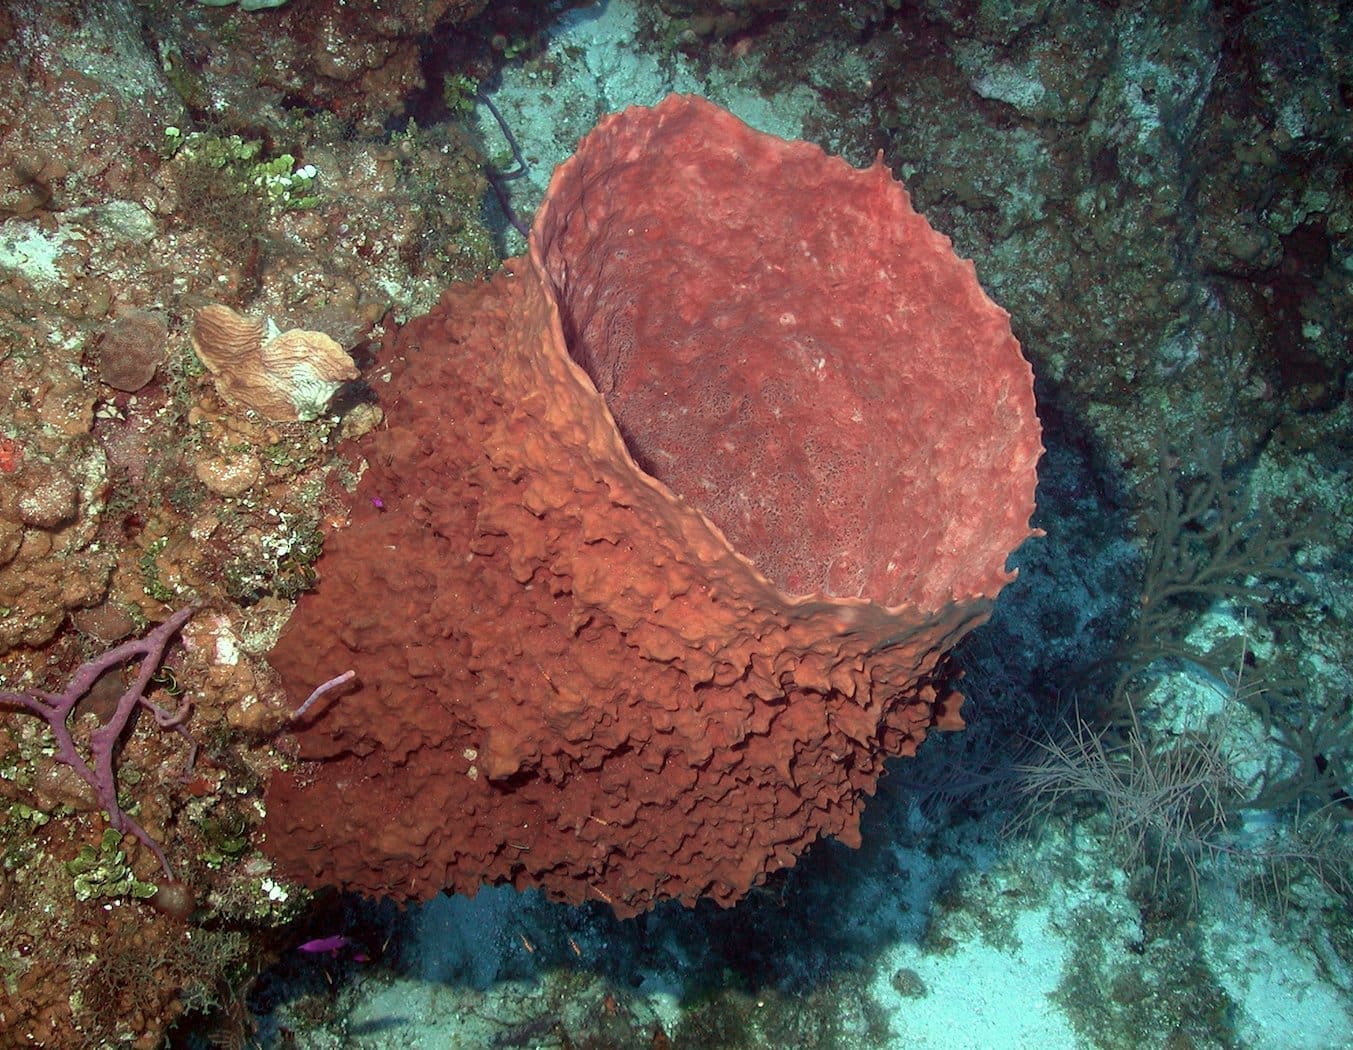 Featured Creature: Giant Barrel Sponge